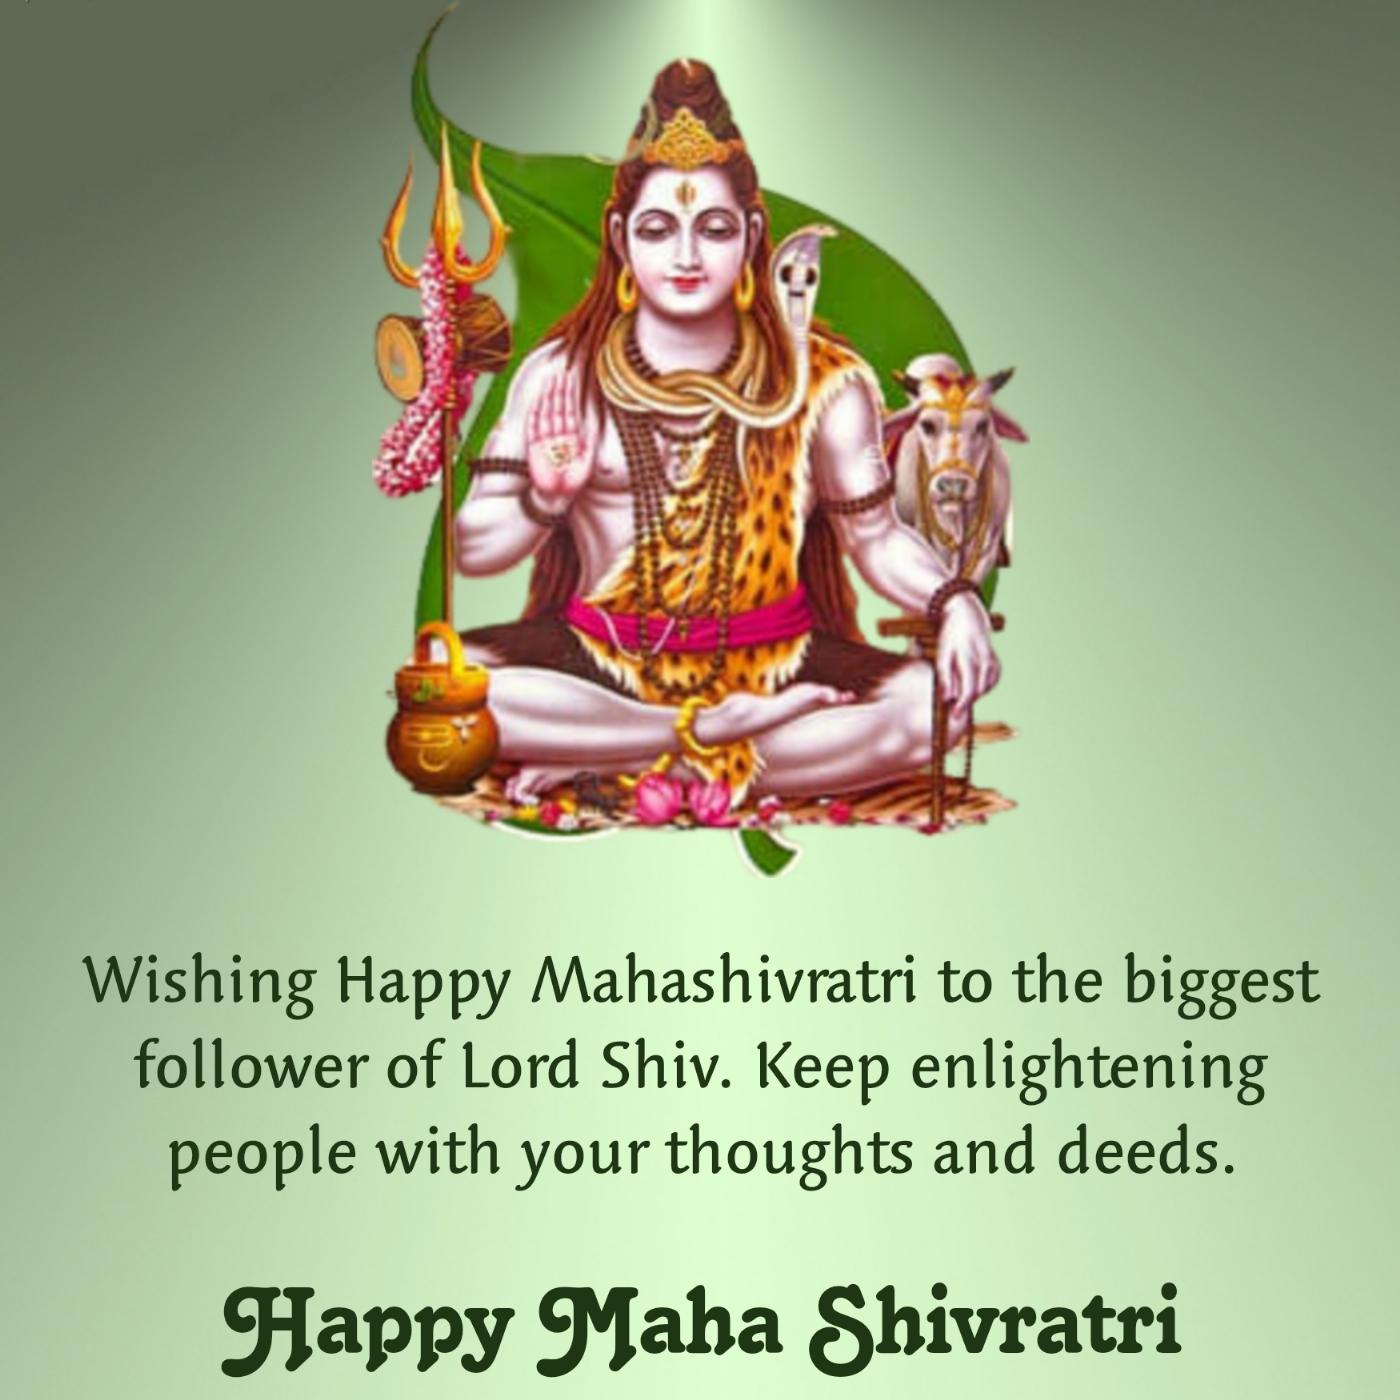 Wishing Happy Mahashivratri to the biggest follower of Lord Shiv